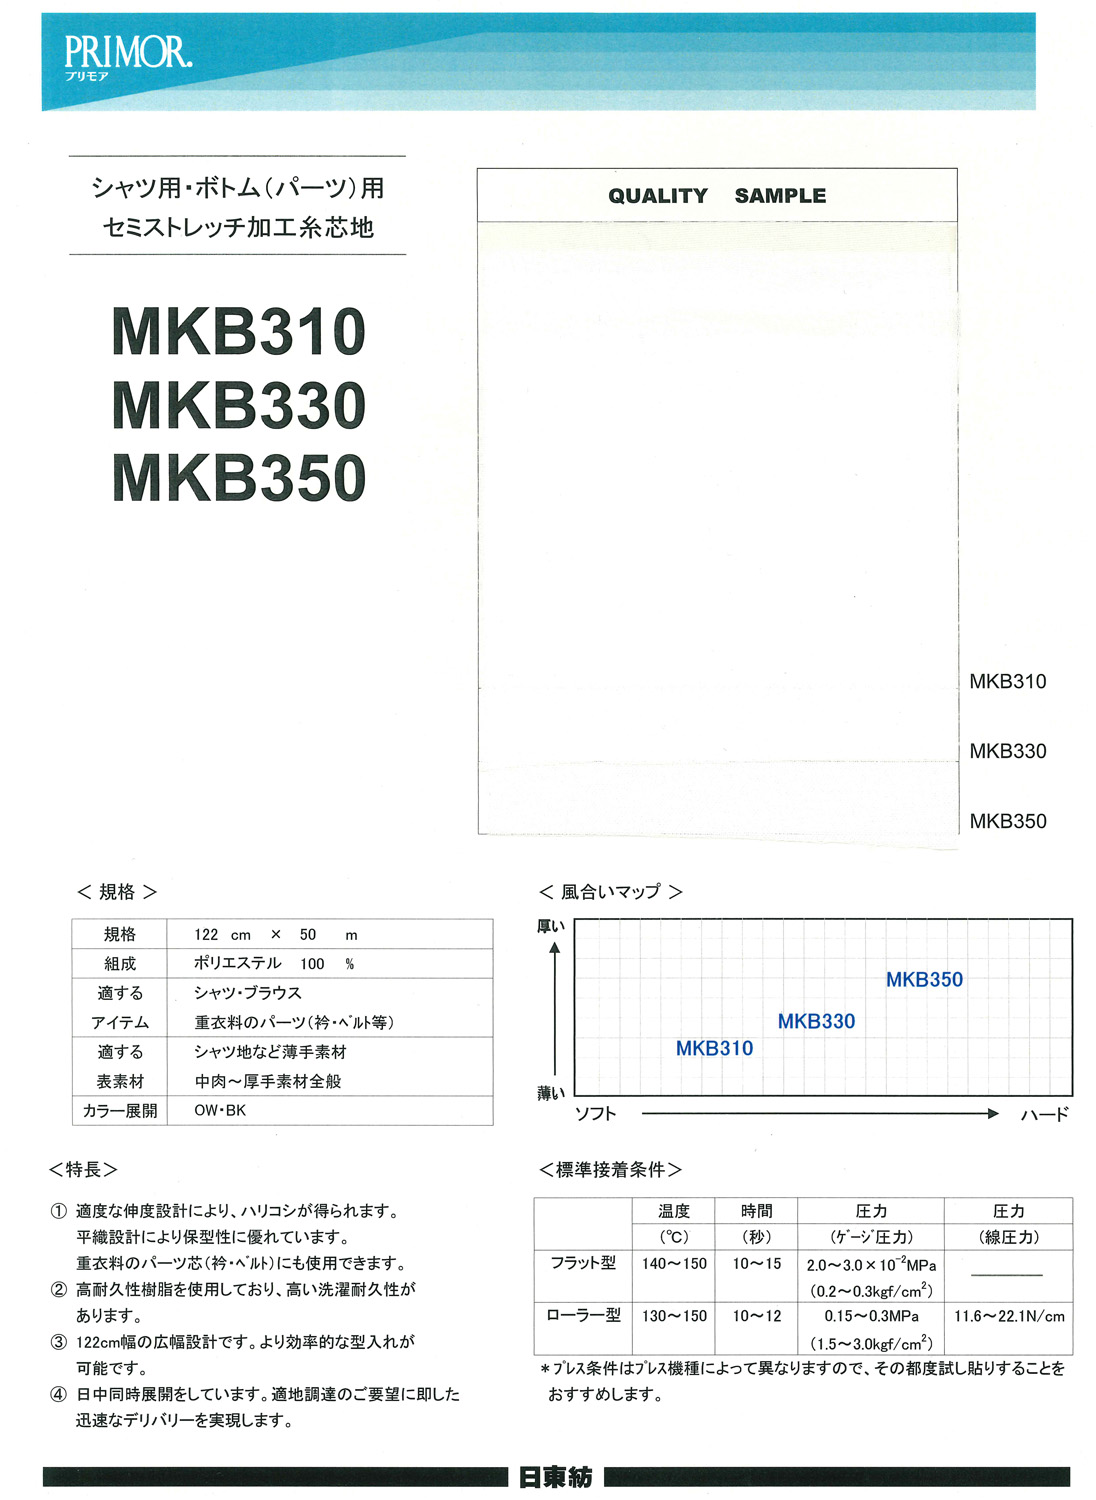 MKB300 シリーズセミストレッチ芯地サンプル帳